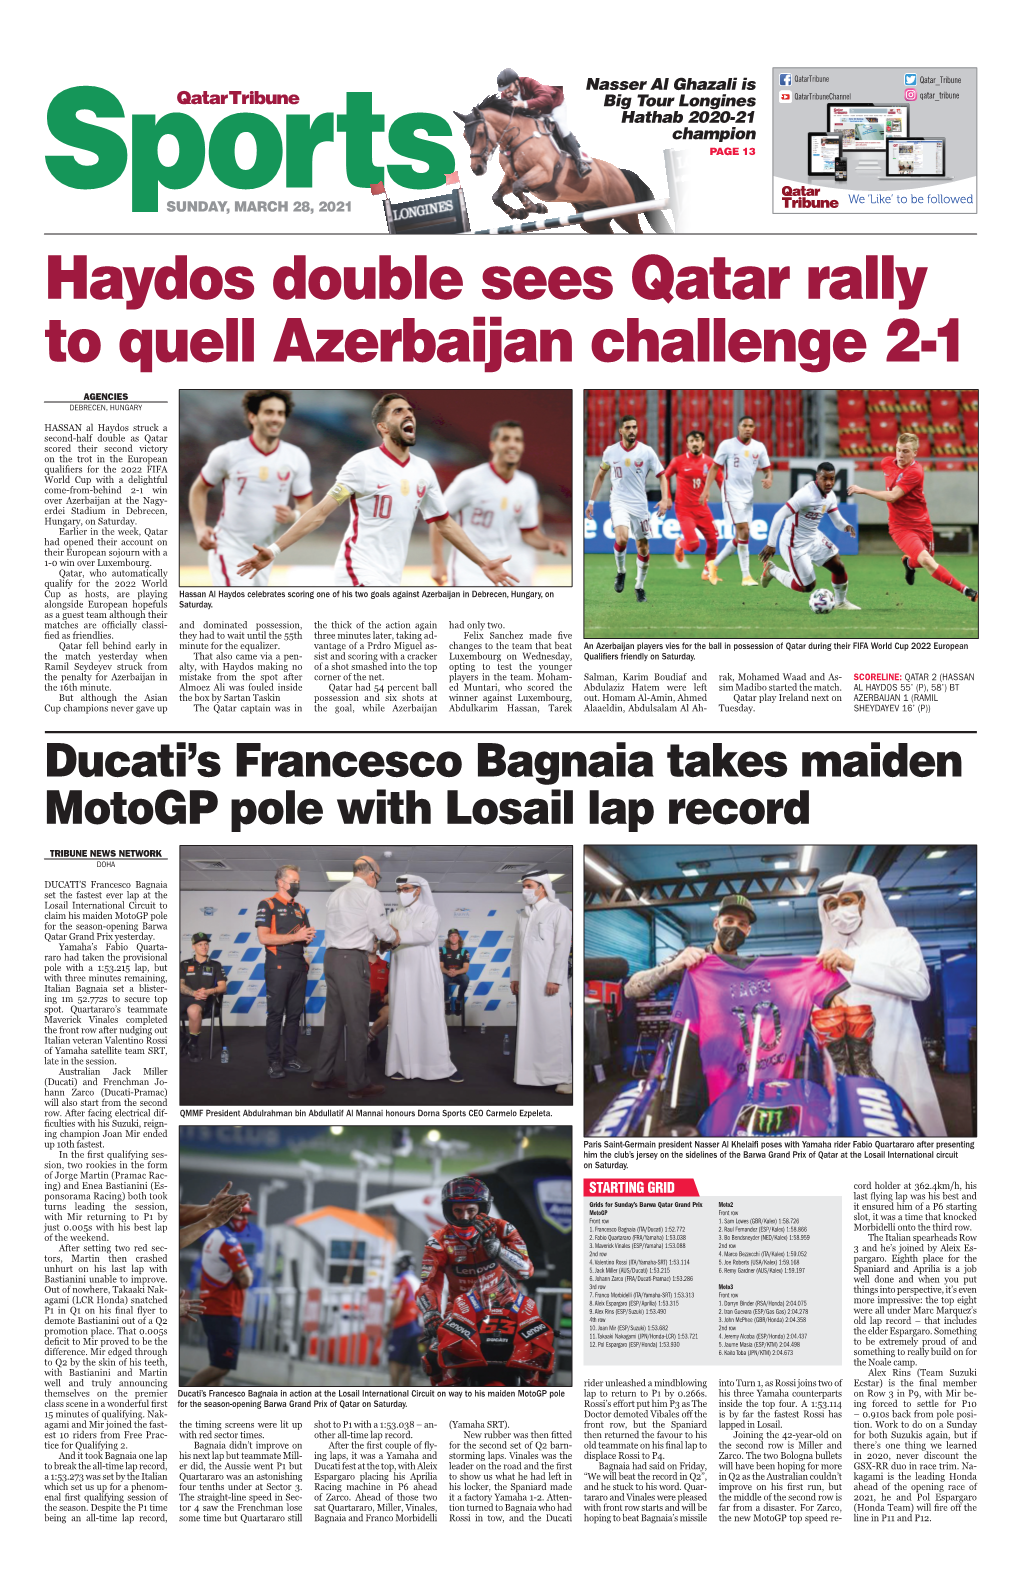 Haydos Double Sees Qatar Rally to Quell Azerbaijan Challenge 2-1